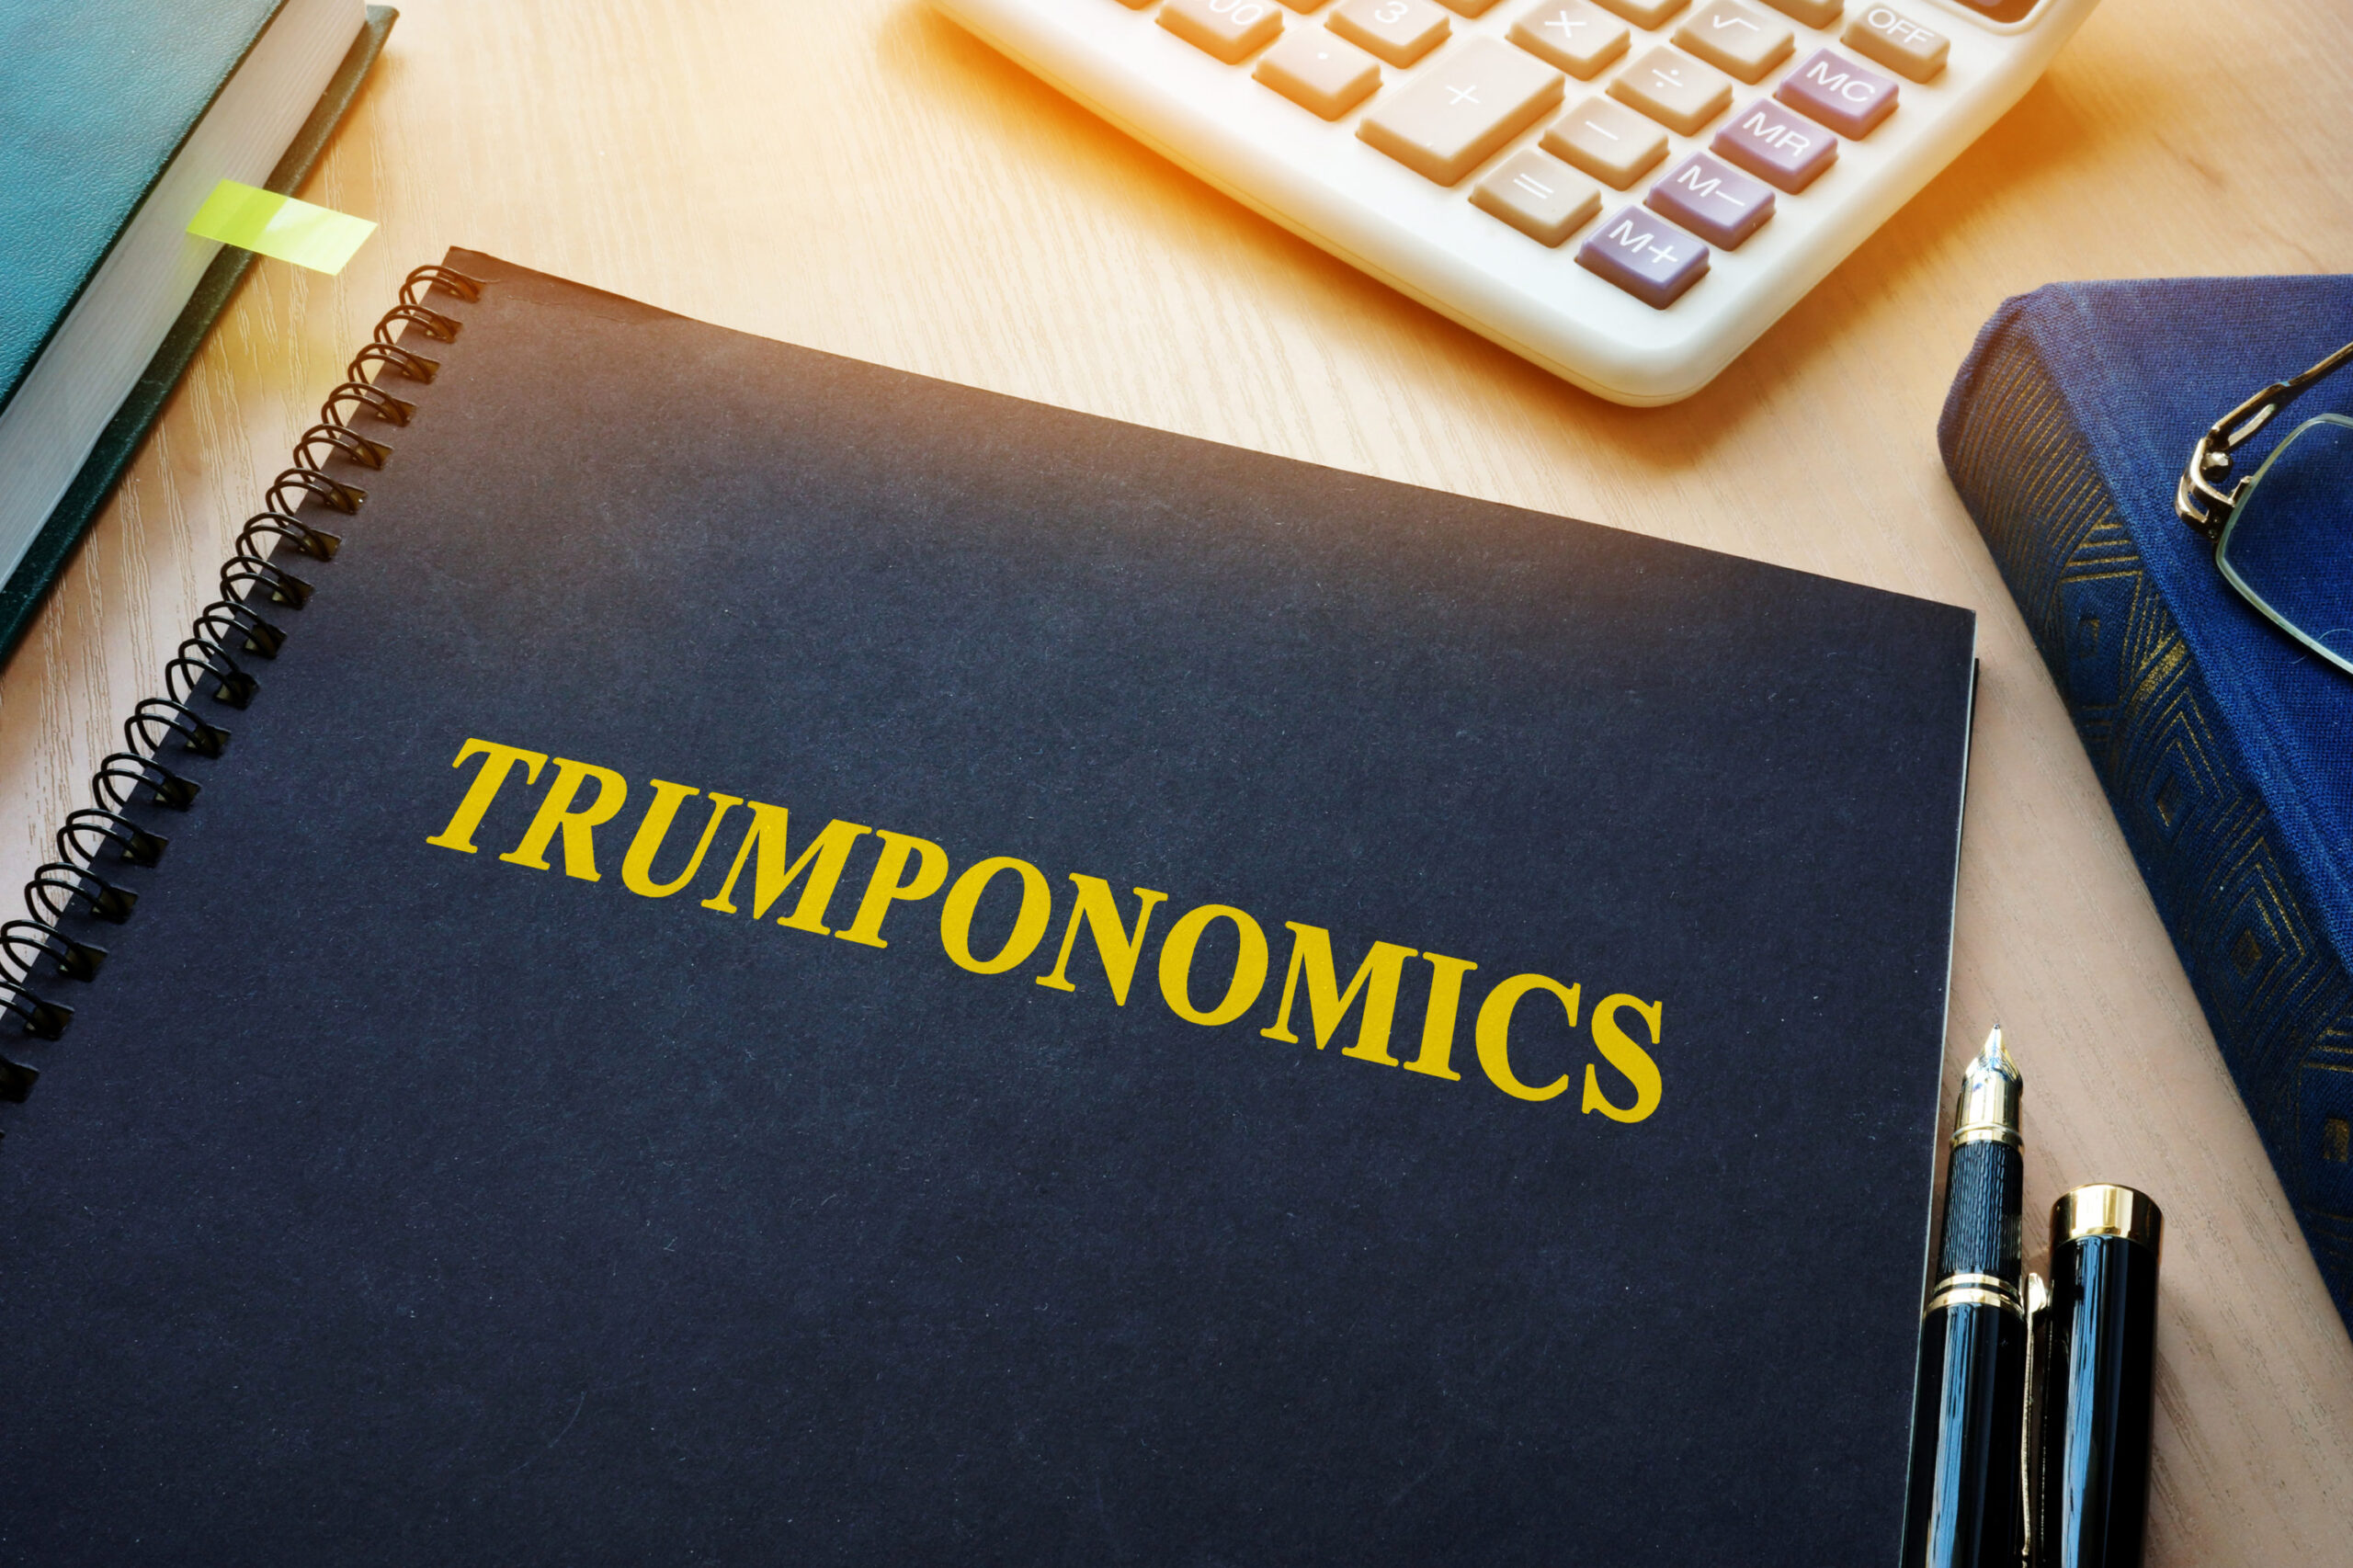 Trumponomics and investment markets